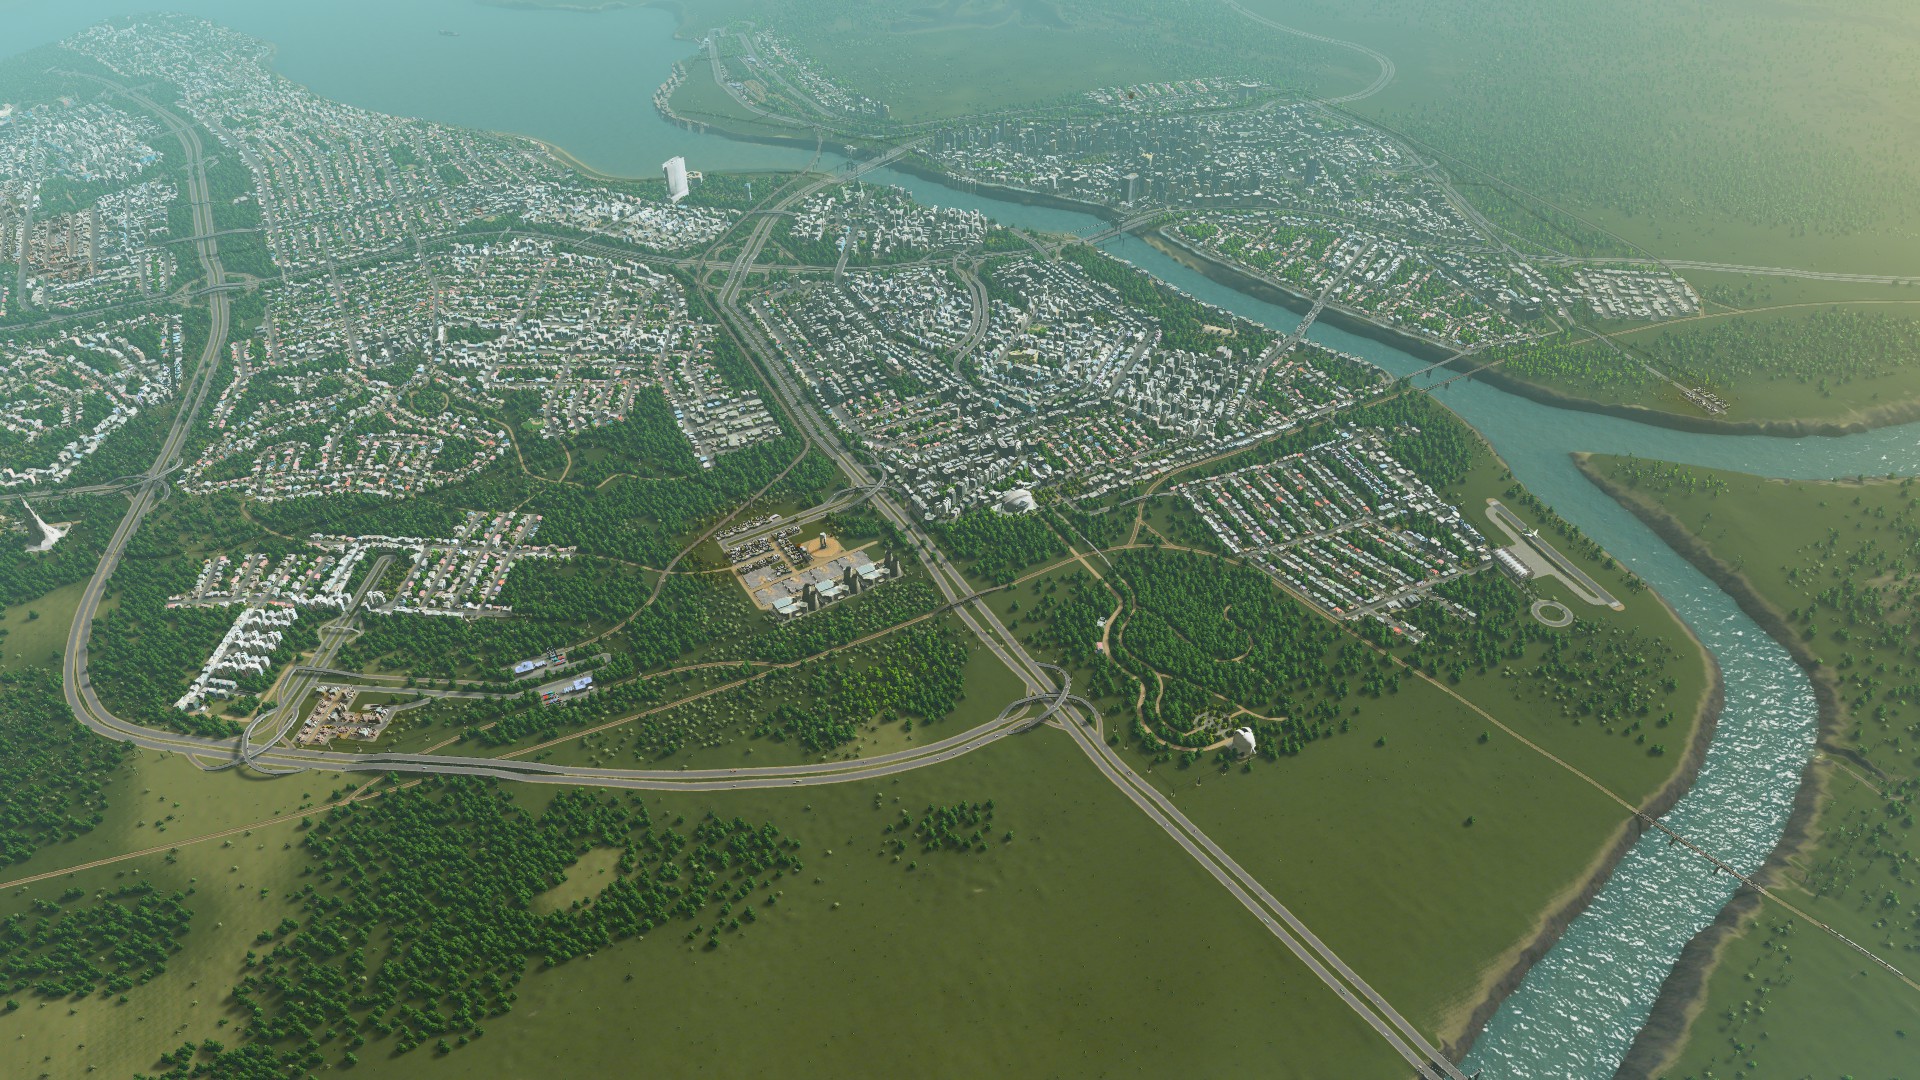 Port Washington 100k+ (Realistic City) - Cities: Skylines Mod download